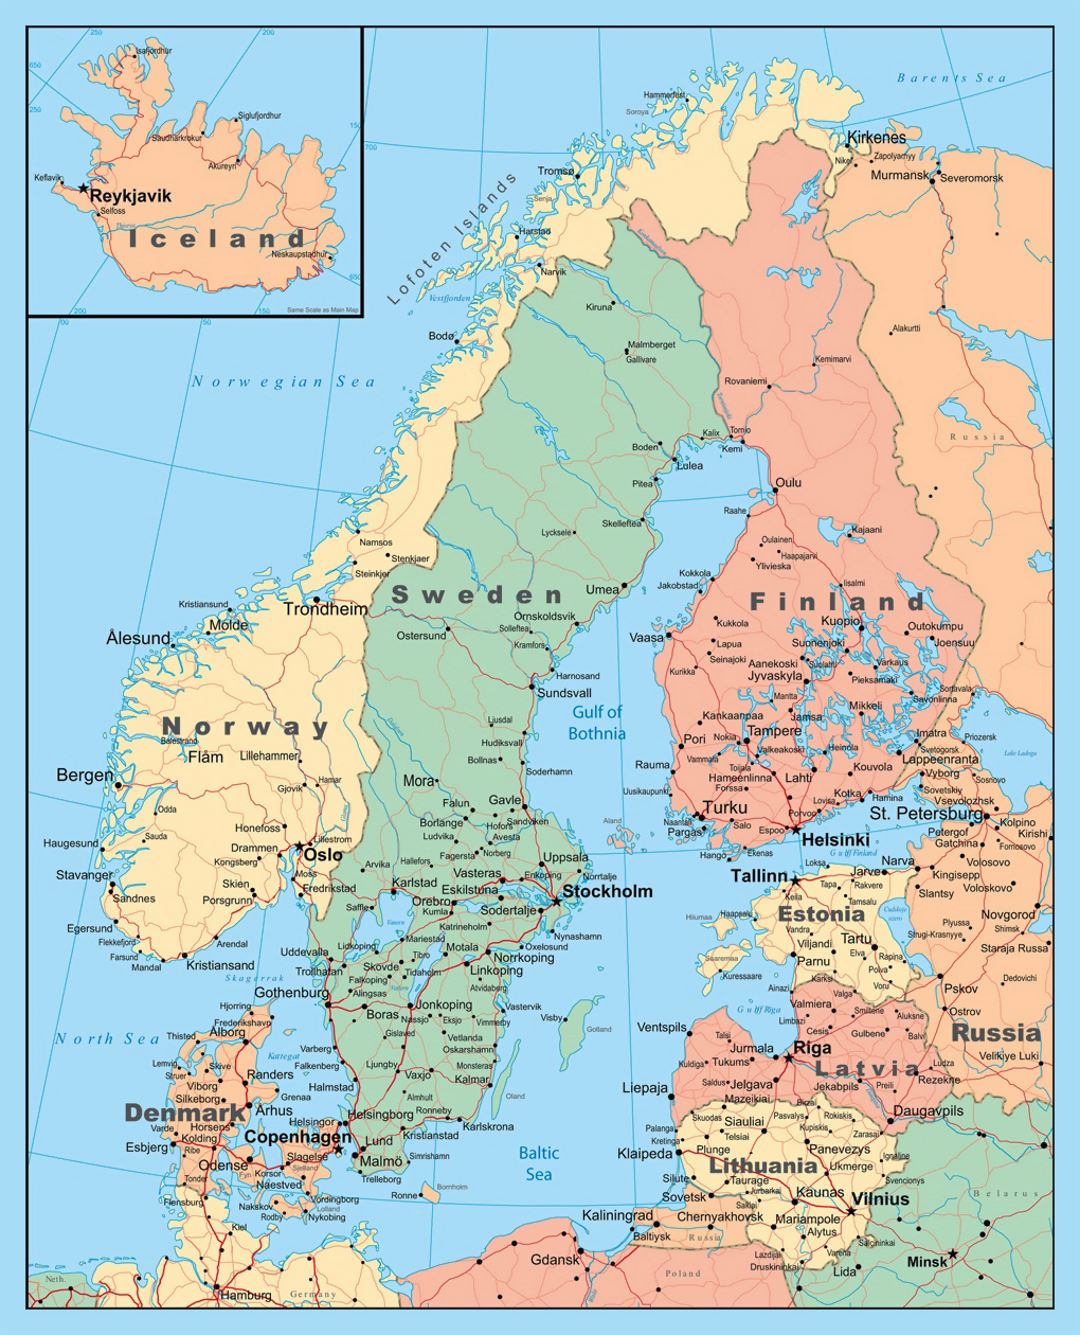 Detailed political map of Scandinavia